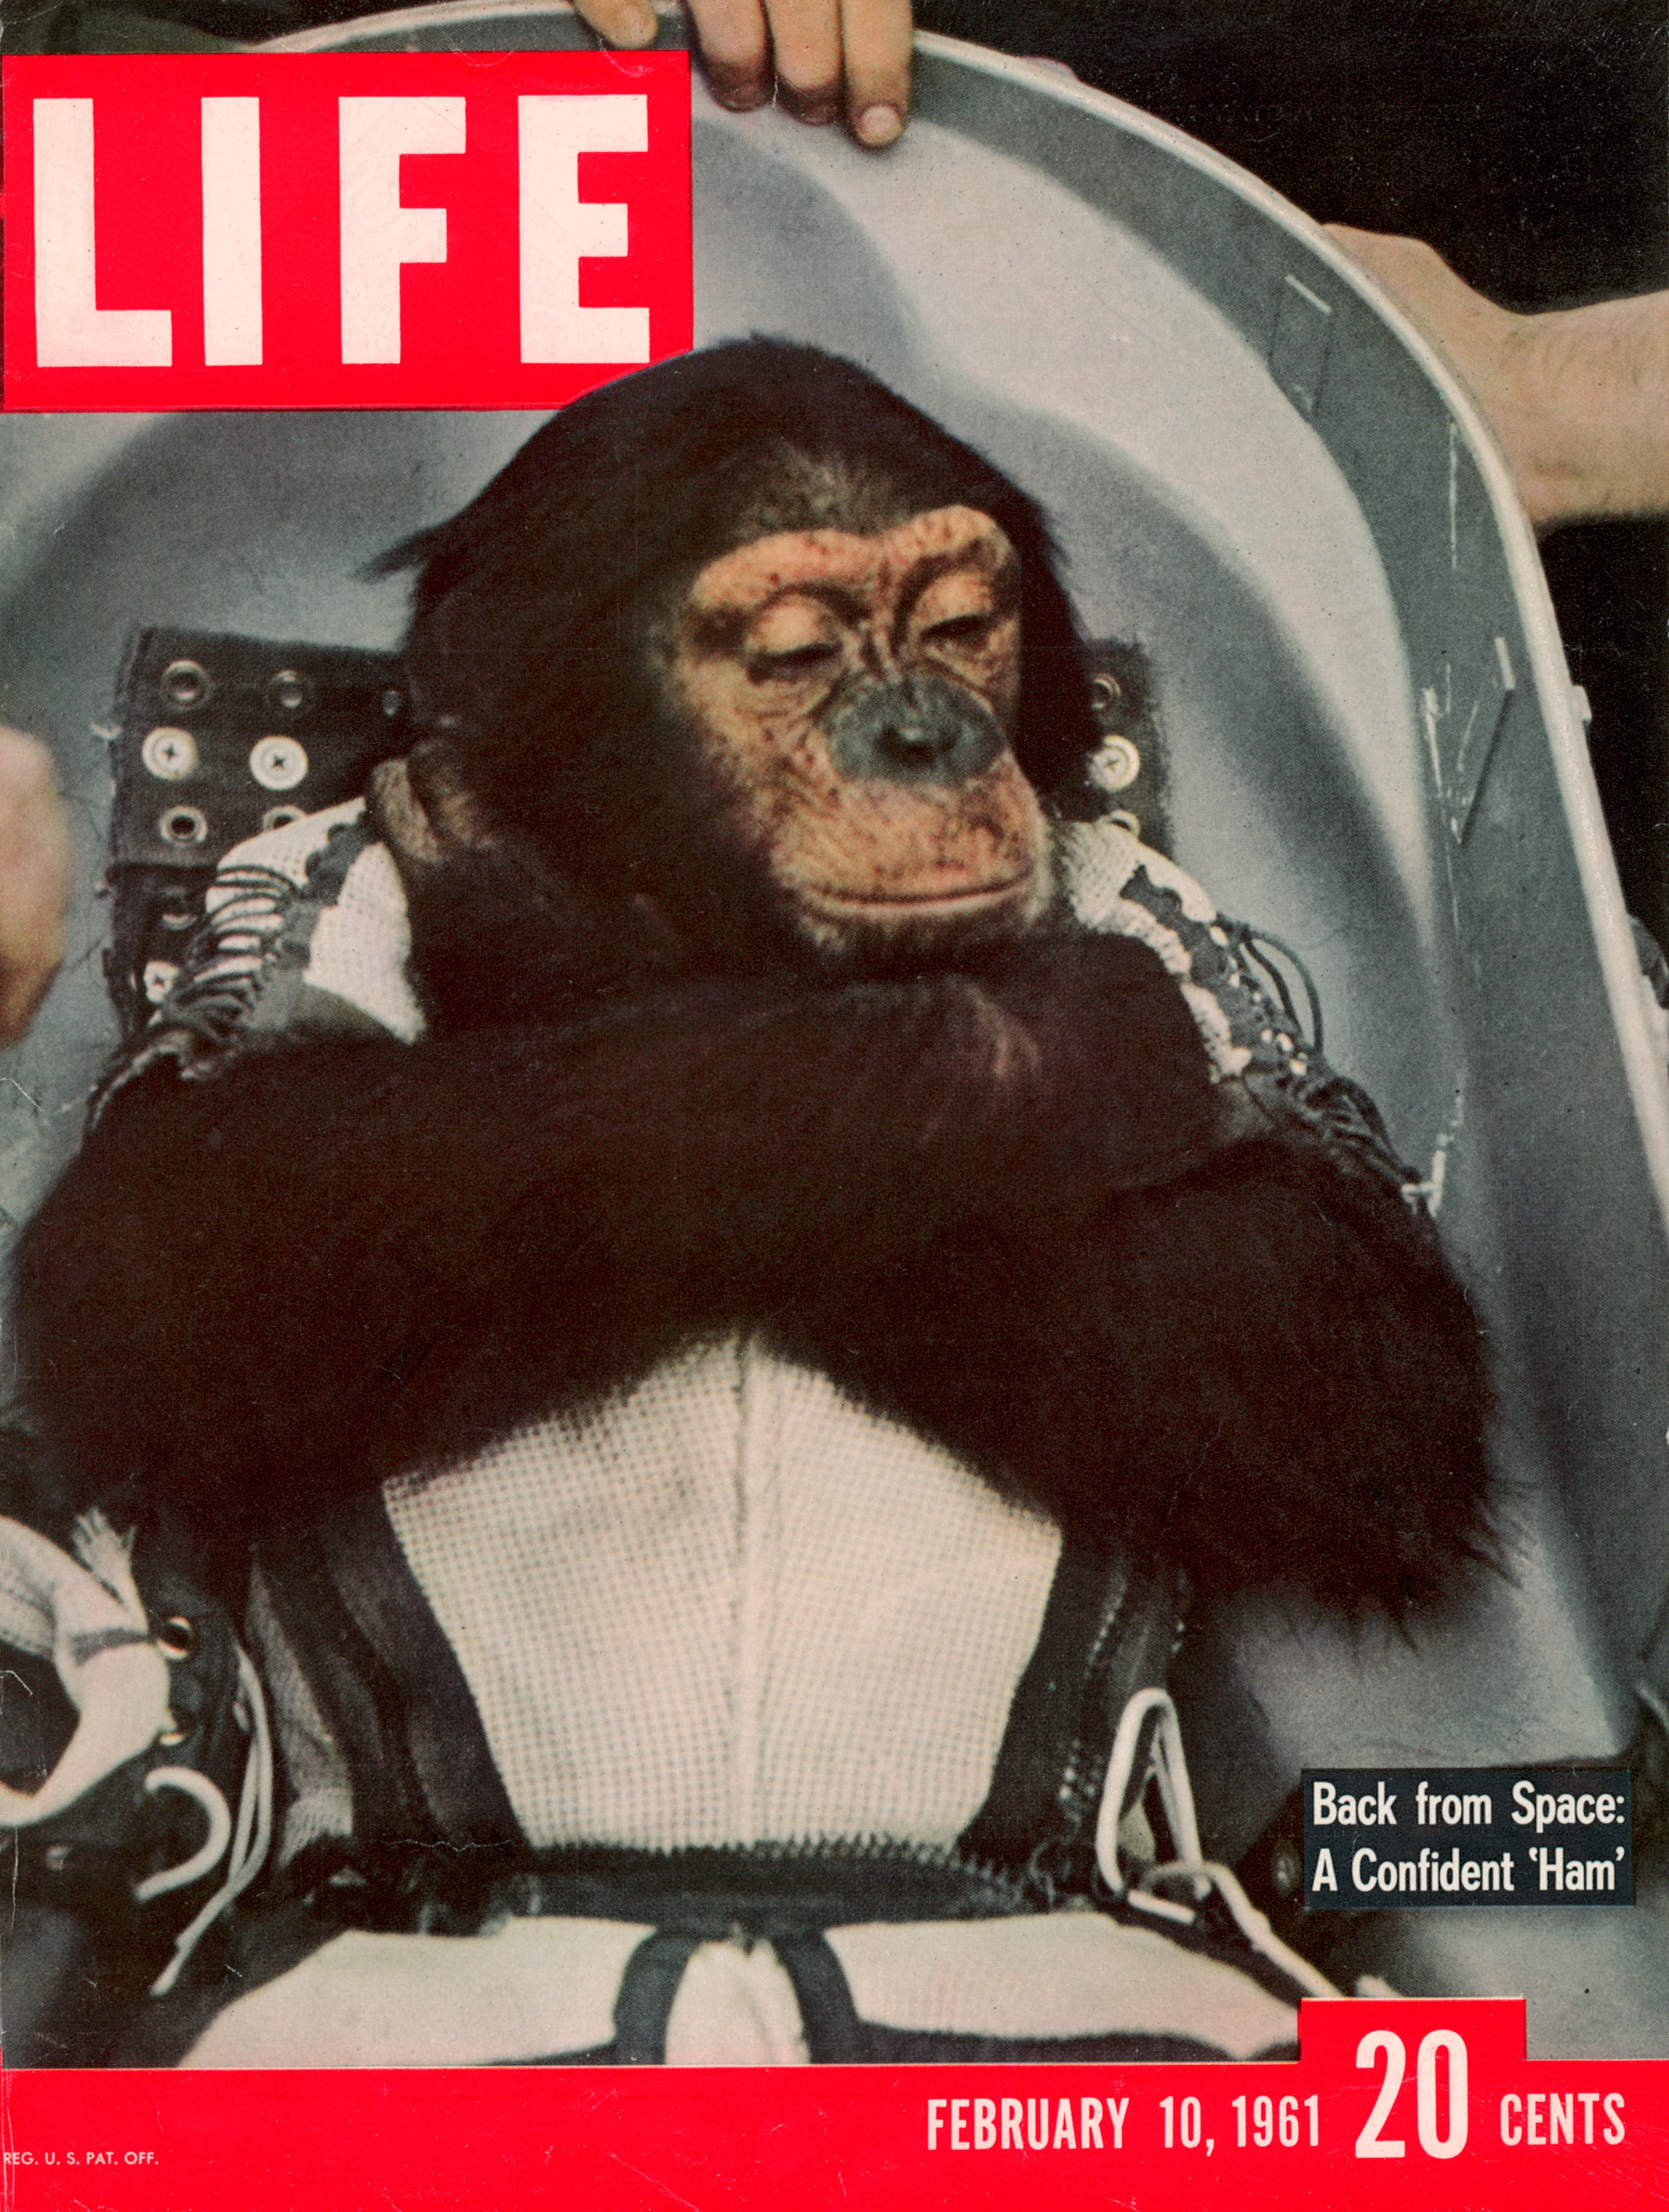 February 10, 1961 LIFE Magazine cover